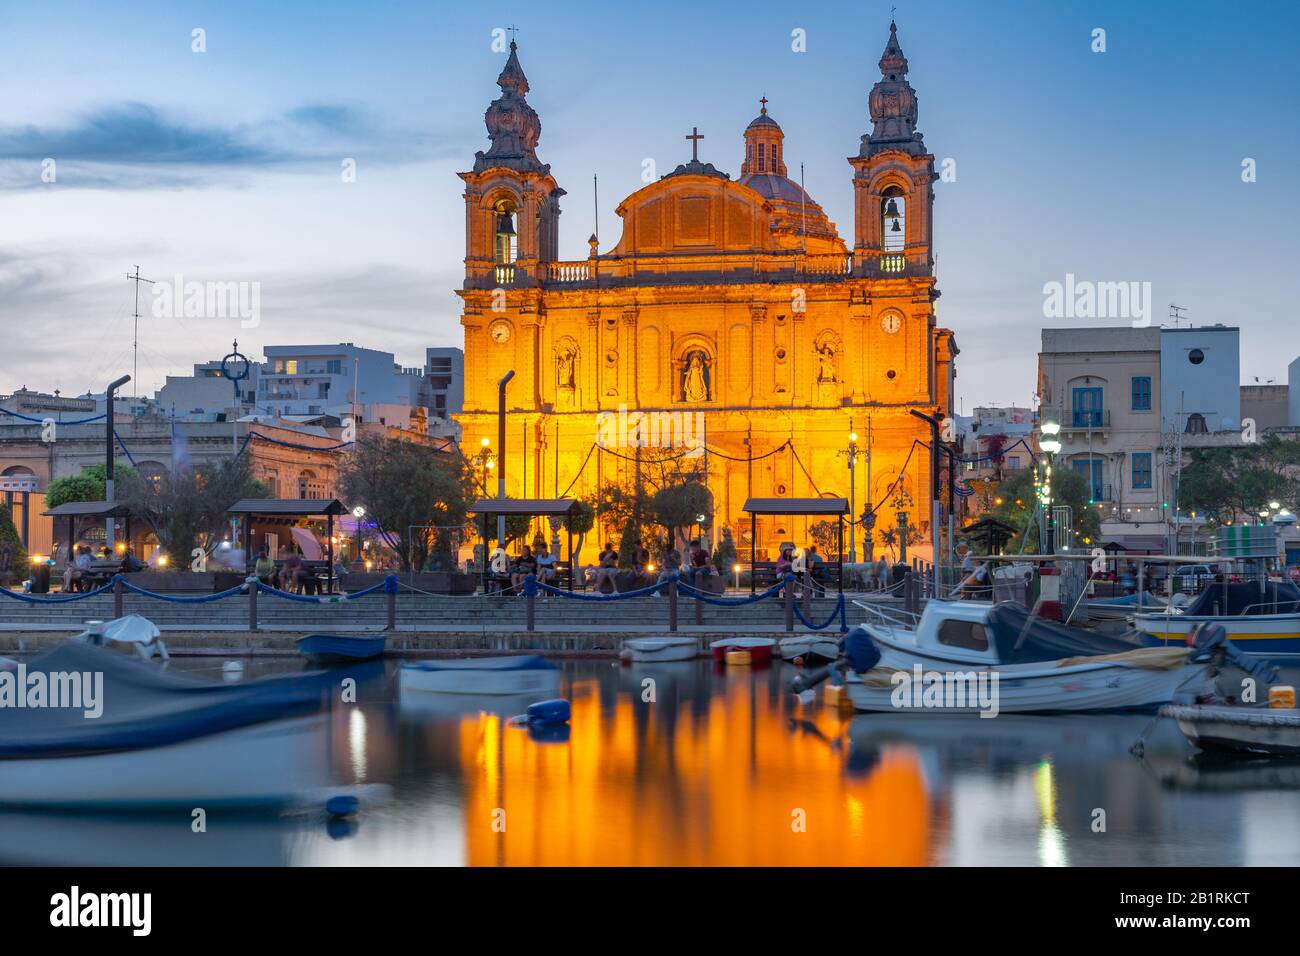 Valletta harbour with yachts and fishing boats, Msida Parish Church of Saint Joseph at sunset, Malta Stock Photo